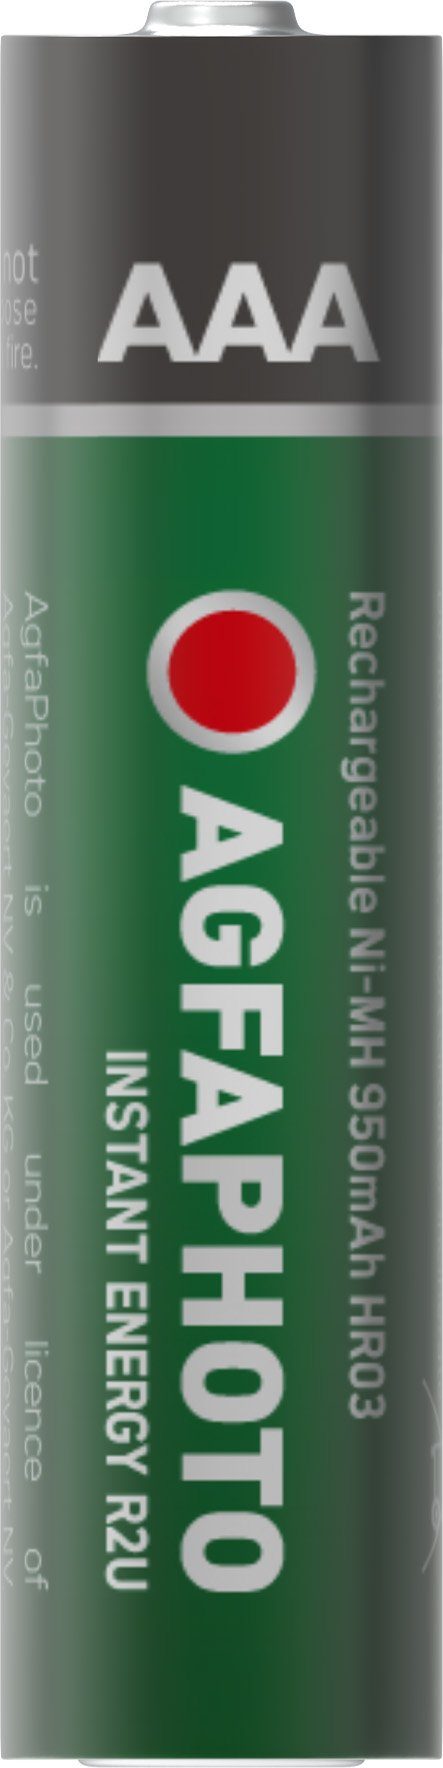 AgfaPhoto Instant Micro/AAA/HR03 Akku 1.2V/950mAh Micro St), Energy (2